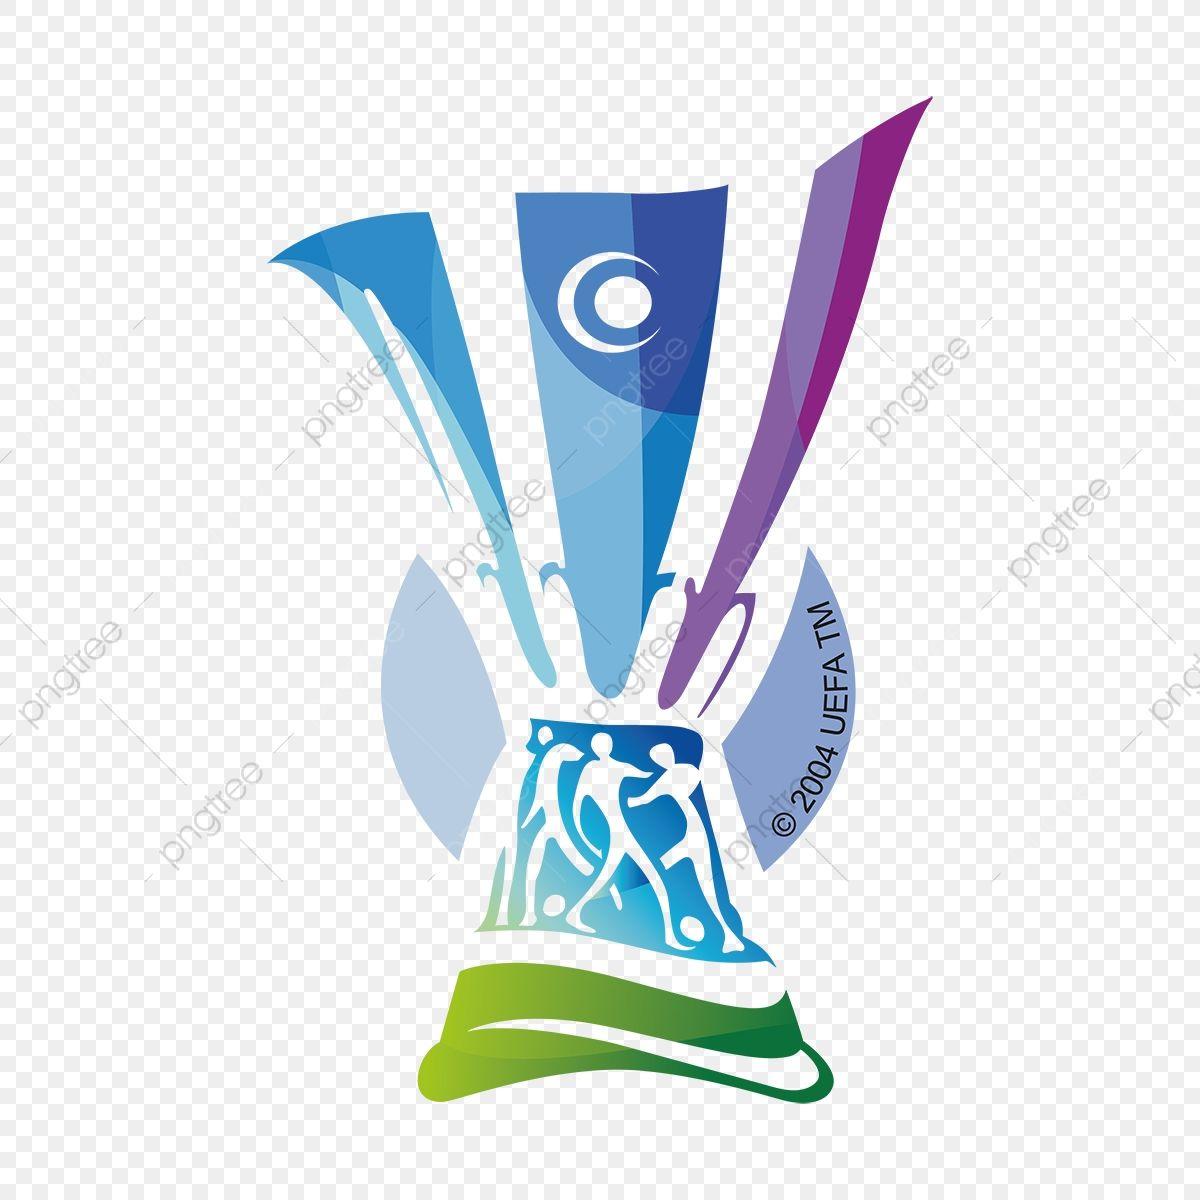 UEFA Logo - Champions League Uefa Logo, Uefa Champions League, Sports, Uefa PNG ...